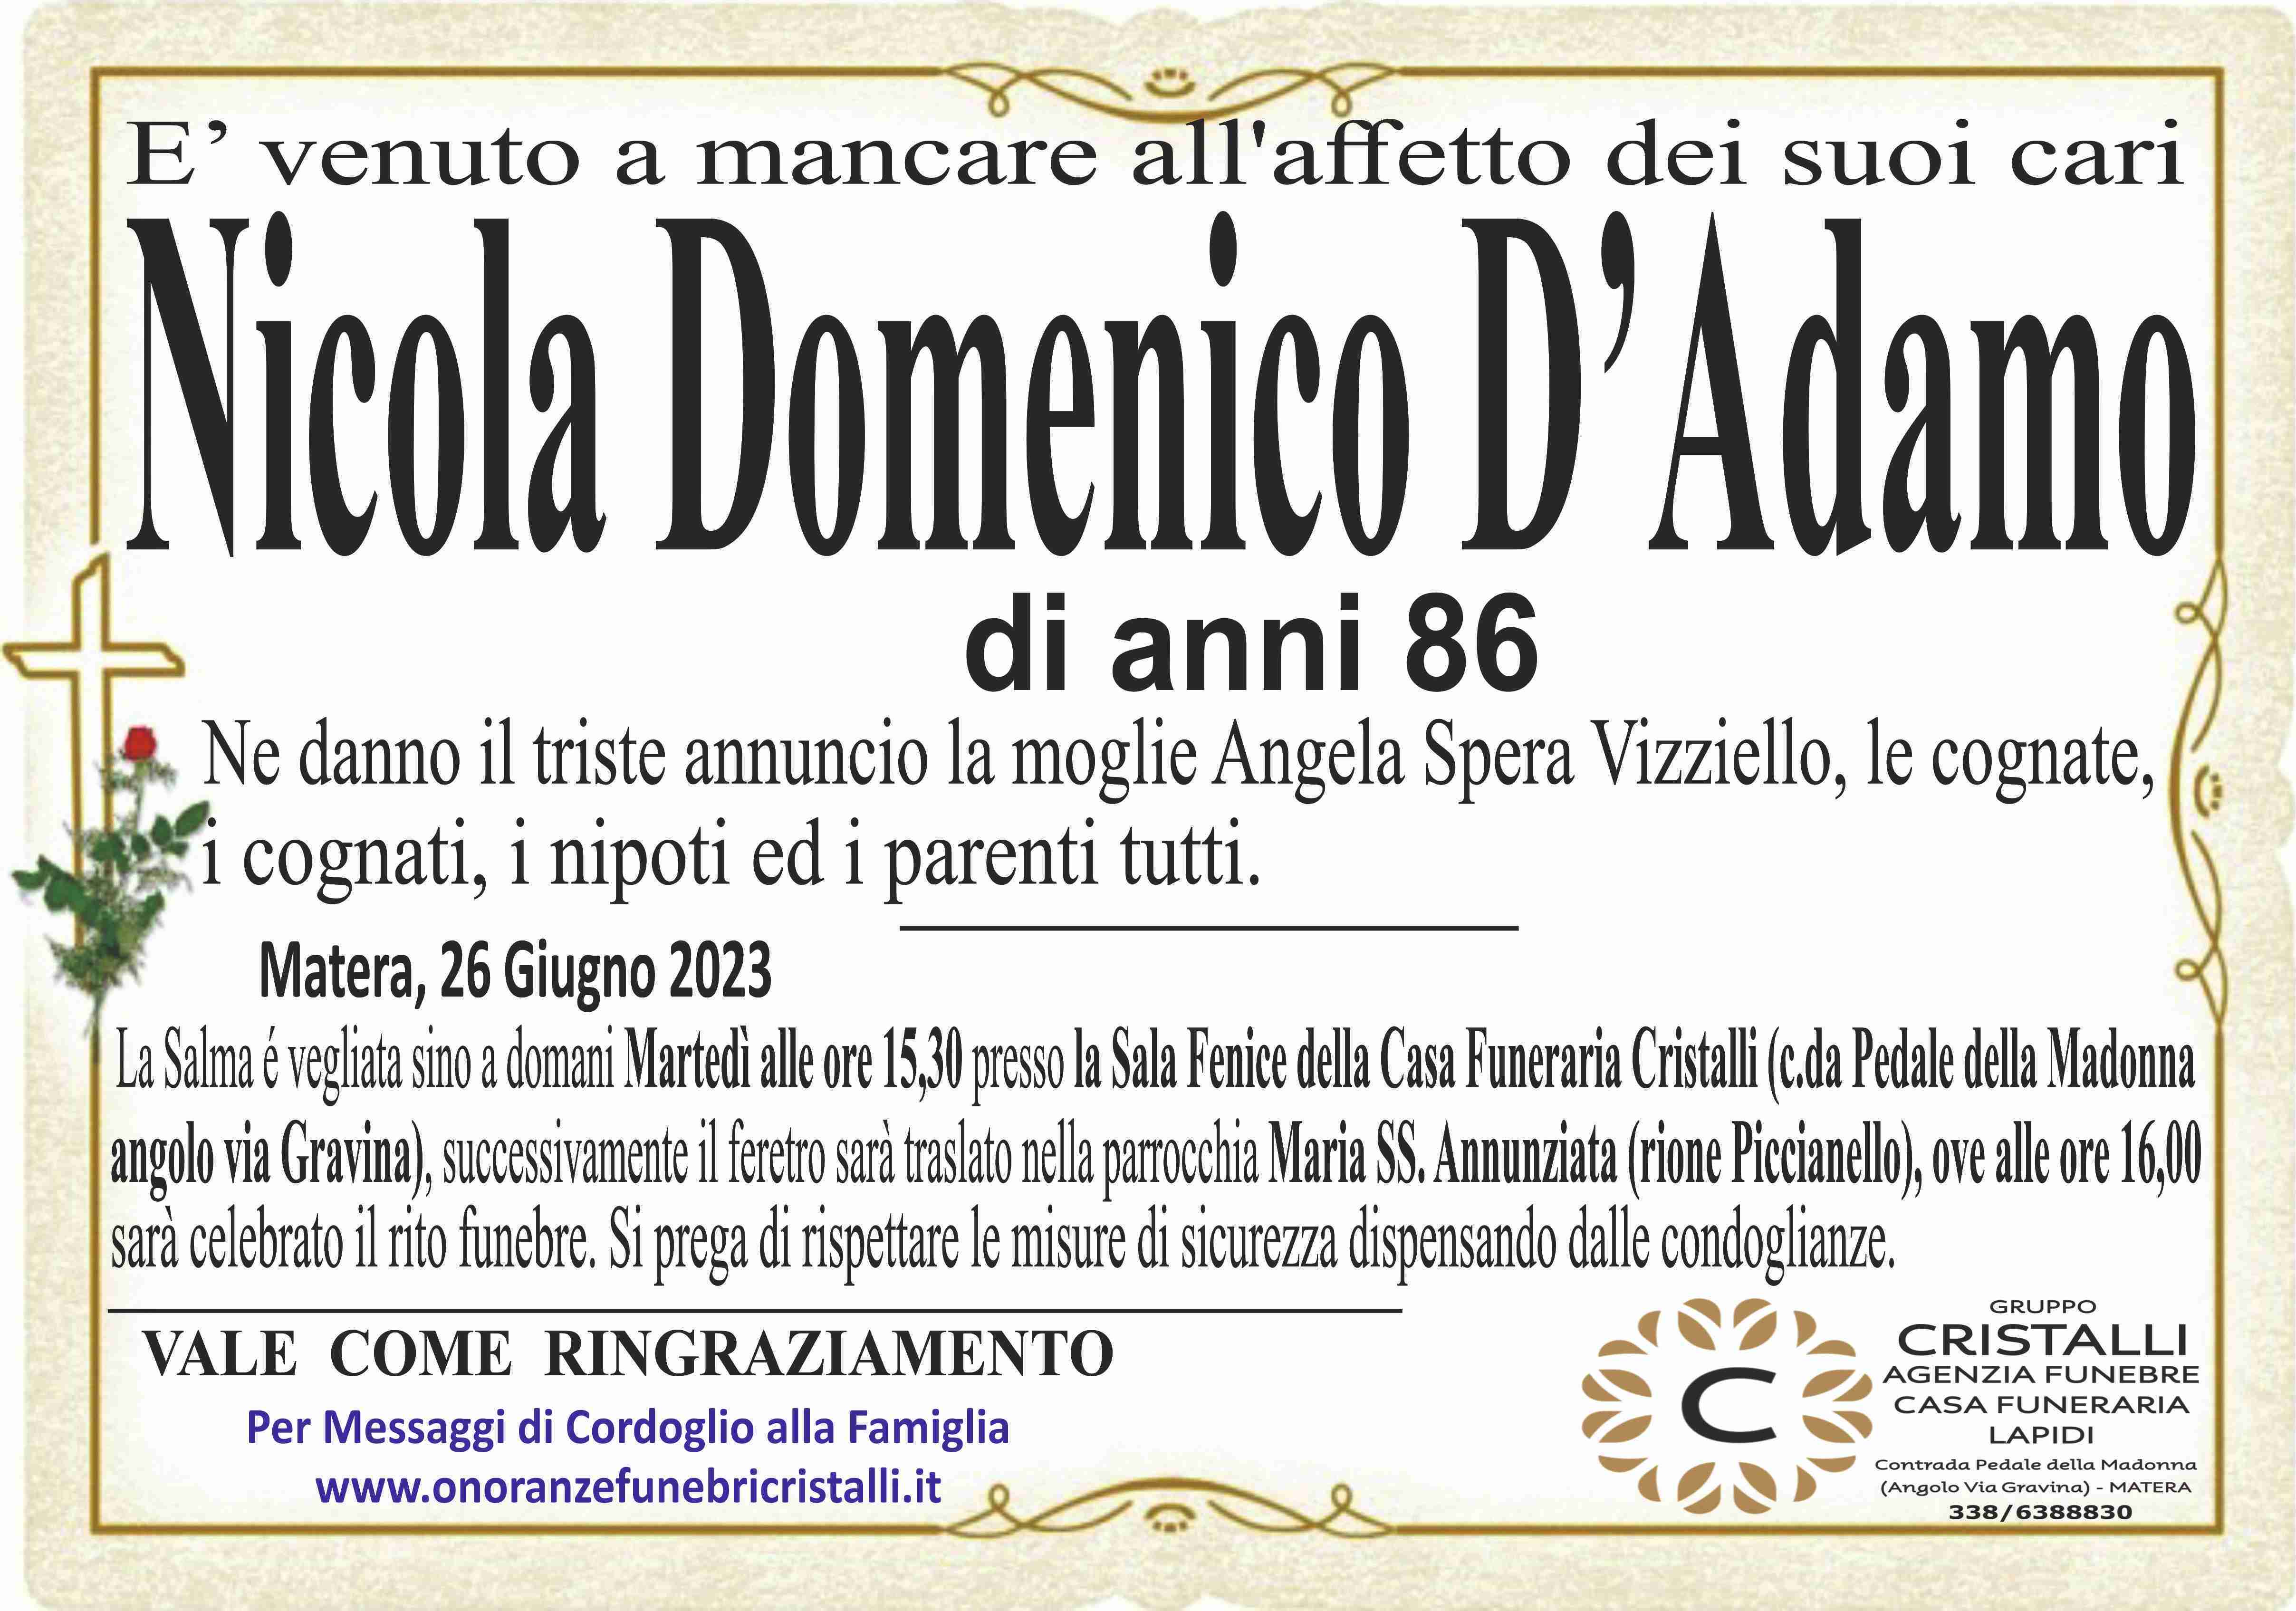 Nicola Domenico D'Adamo